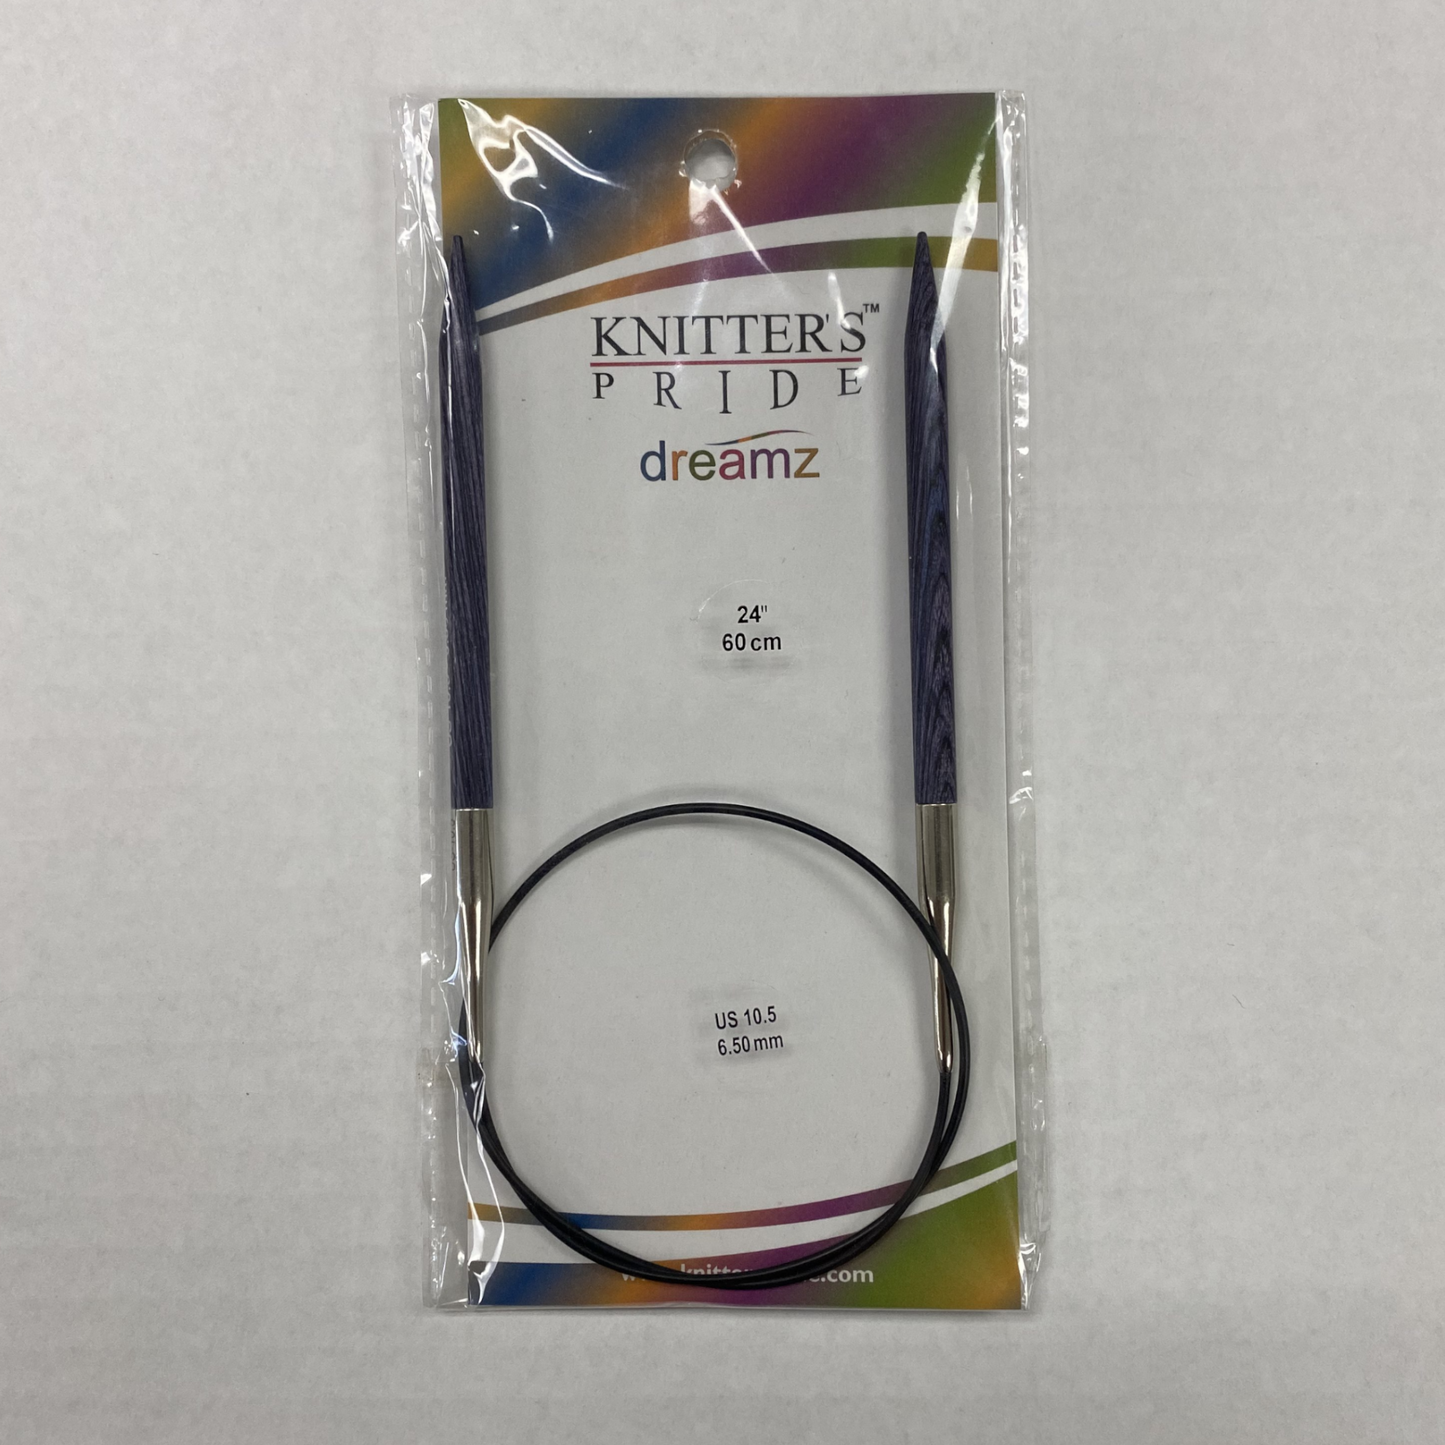 Knitter's Pride - Dreamz - US 10.5 / 6.50mm Fixed Circular Needles